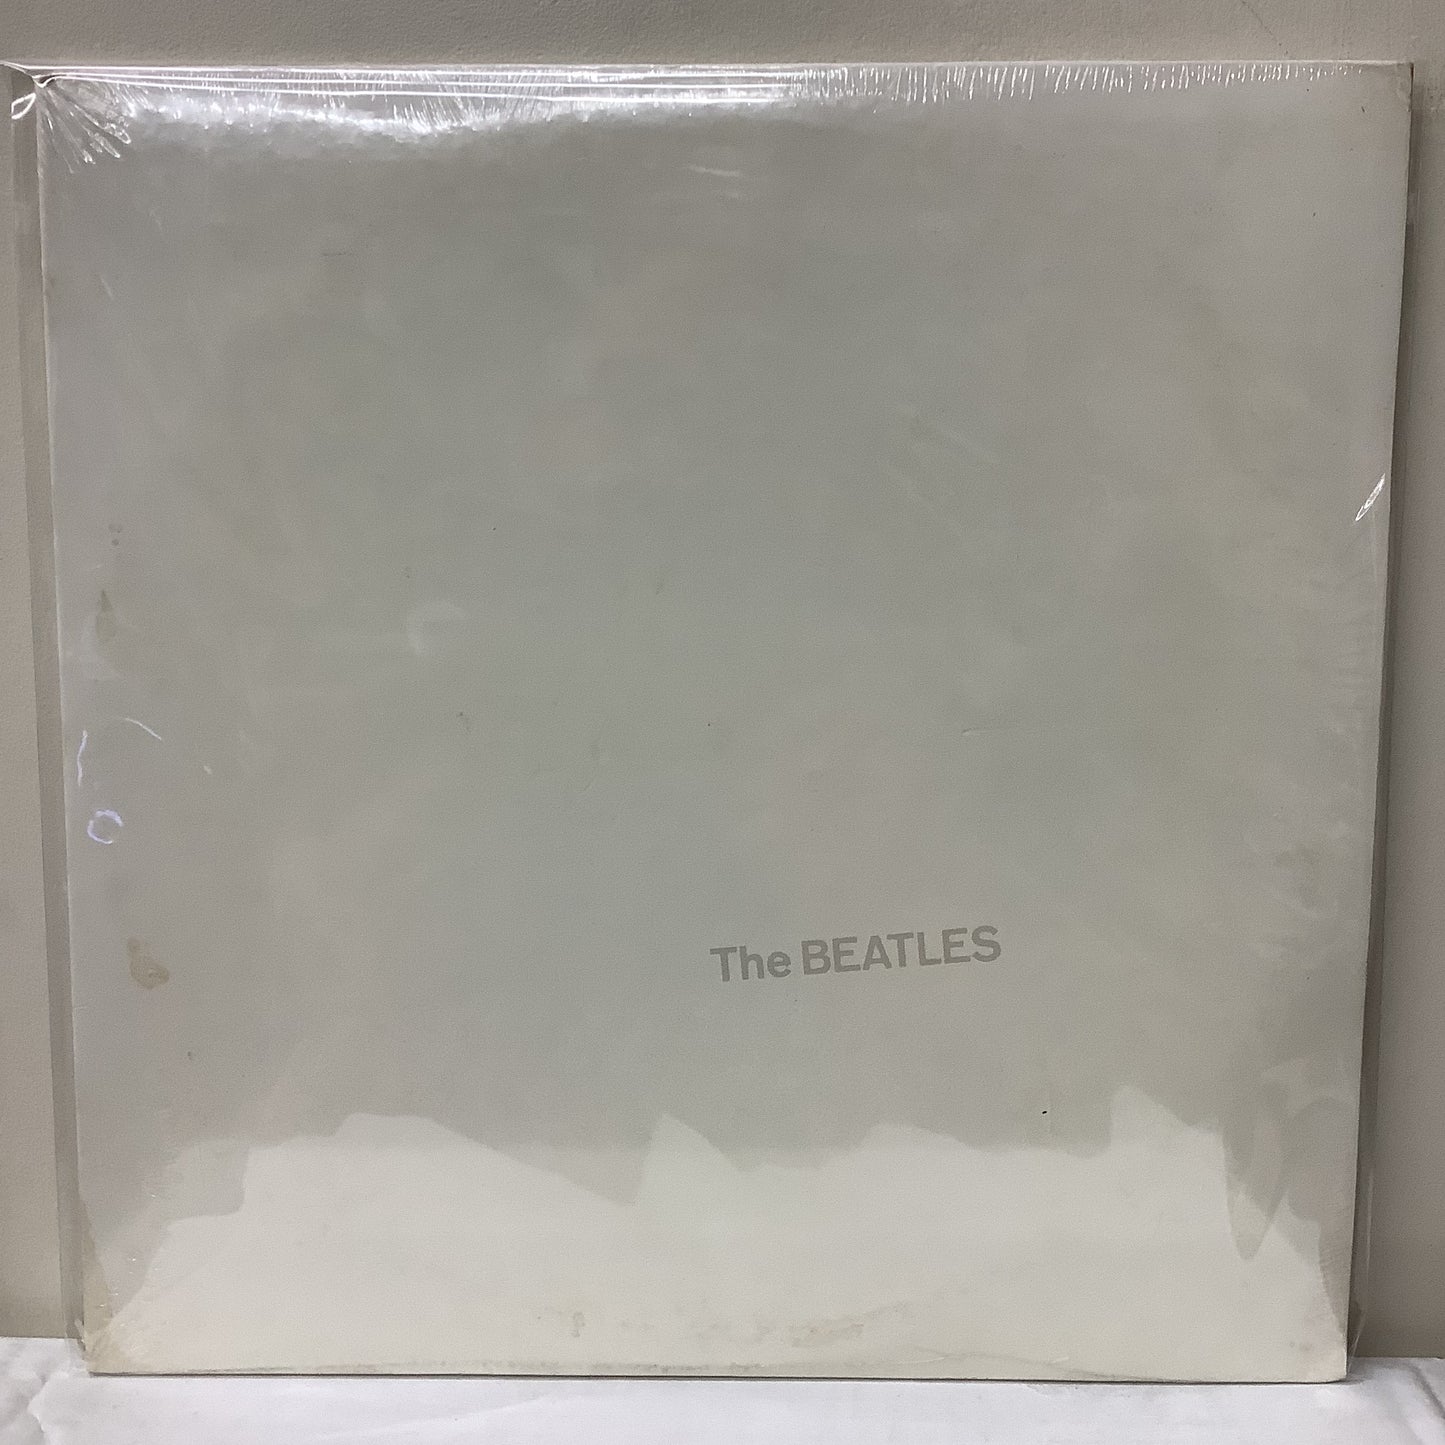 The Beatles - The Beatles [Álbum Blanco] - LP